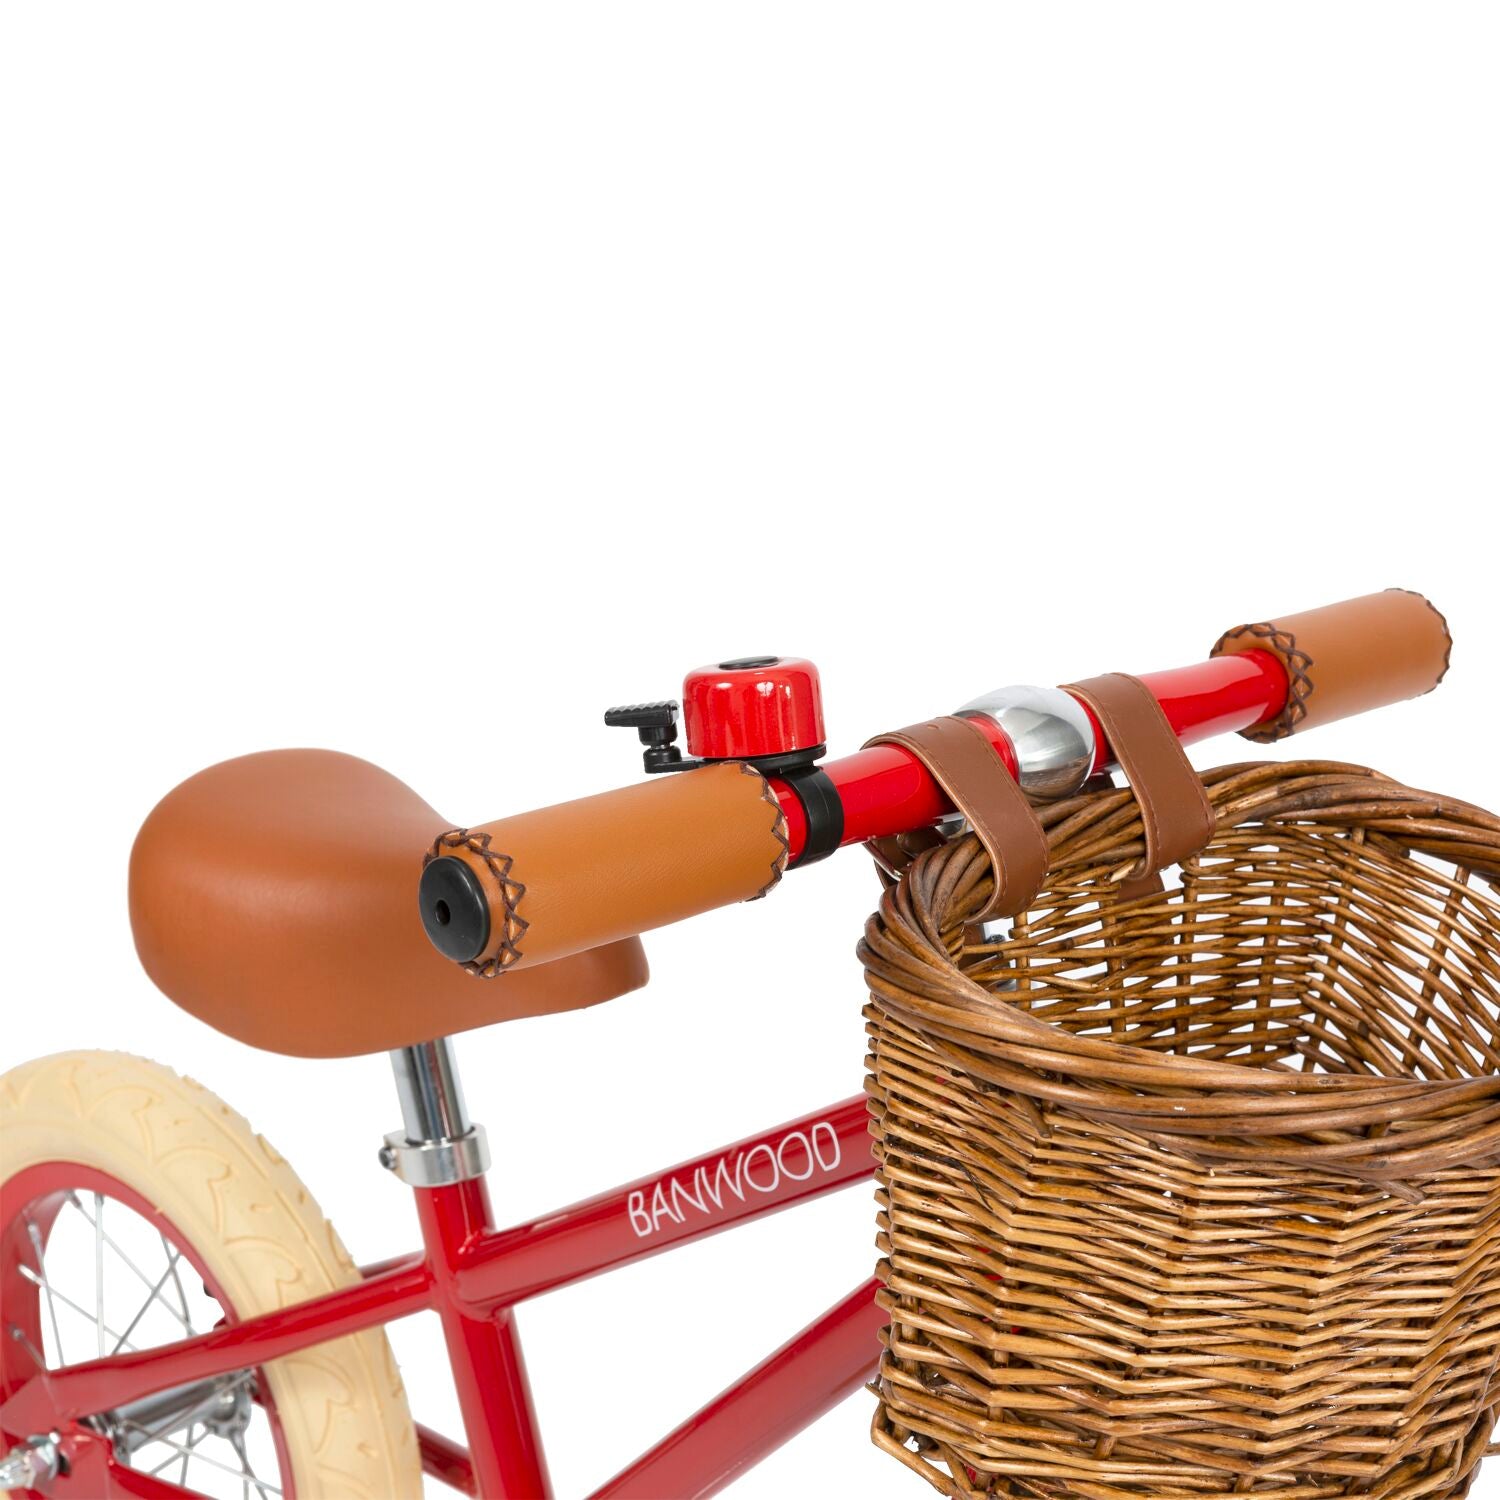 Banwood Red balance bike